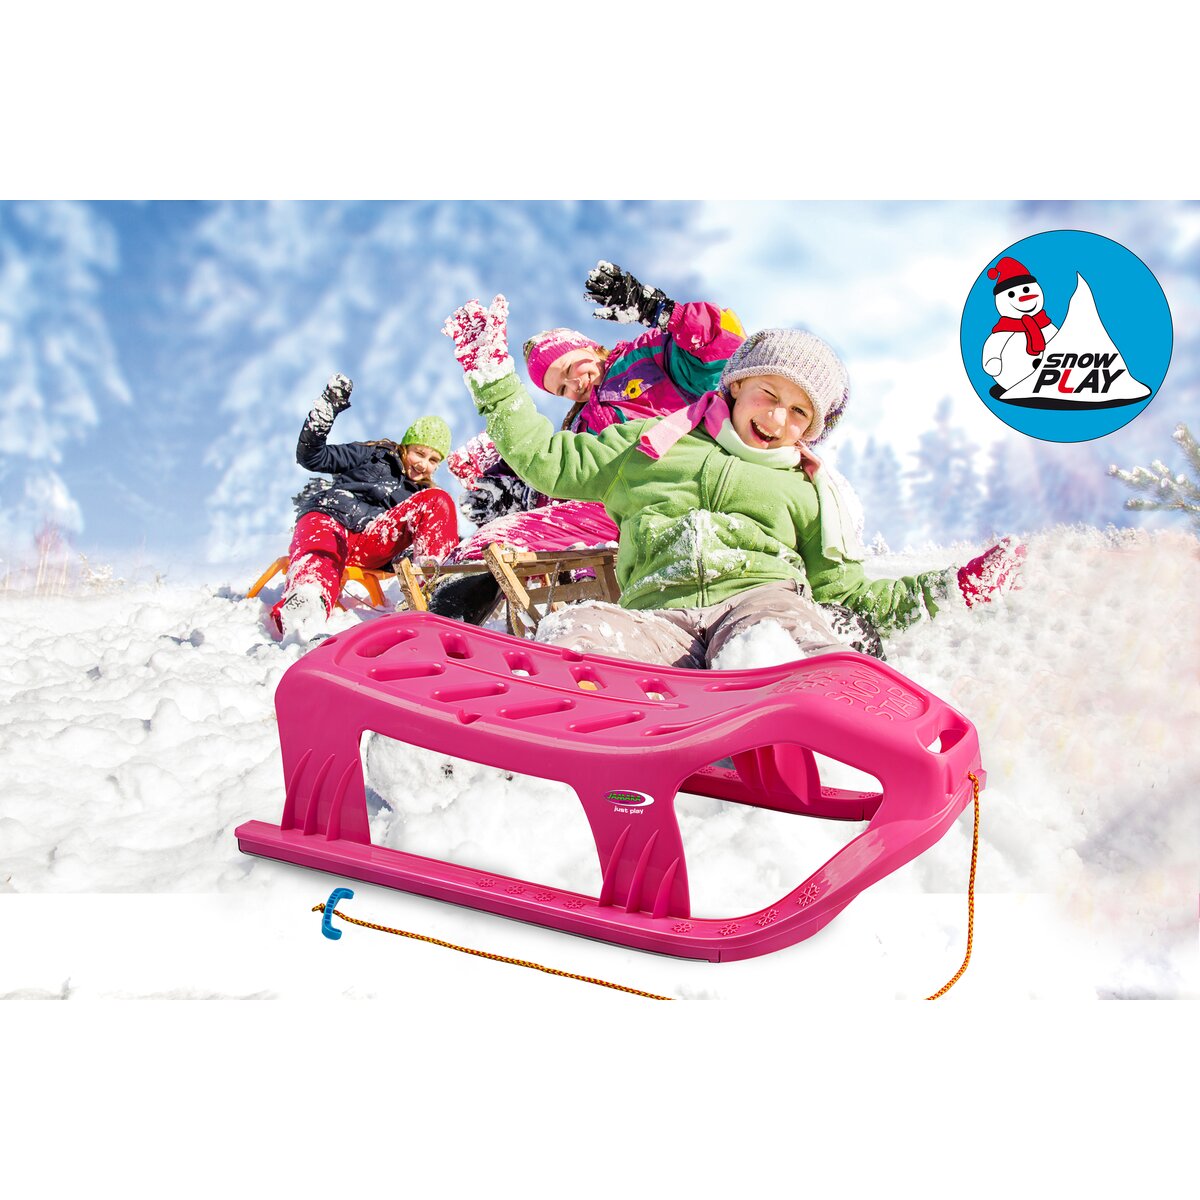 Jamara Snow Play Schlitten Snow-Star 90cm pink